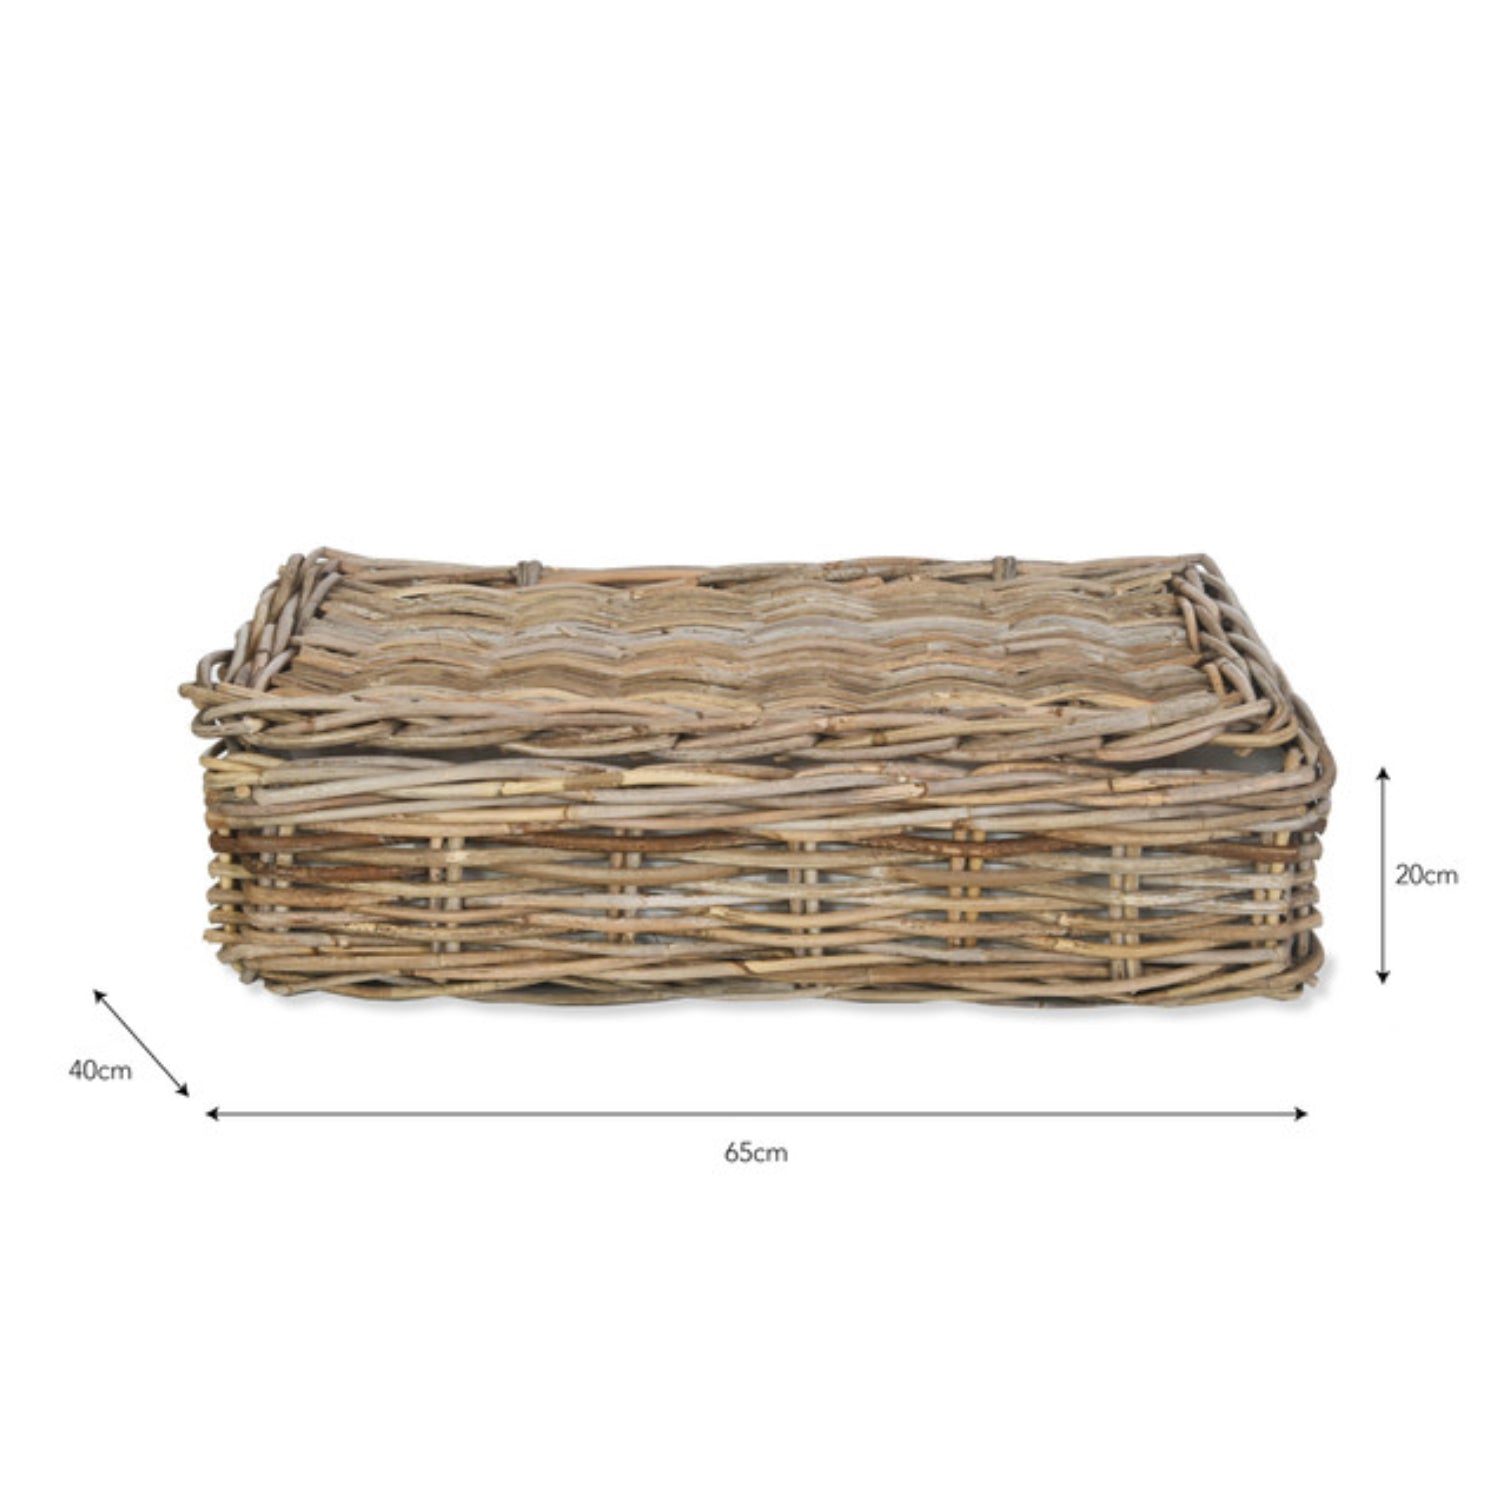 Bembridge Basket Medium with Lid by Garden Trading - Rattan